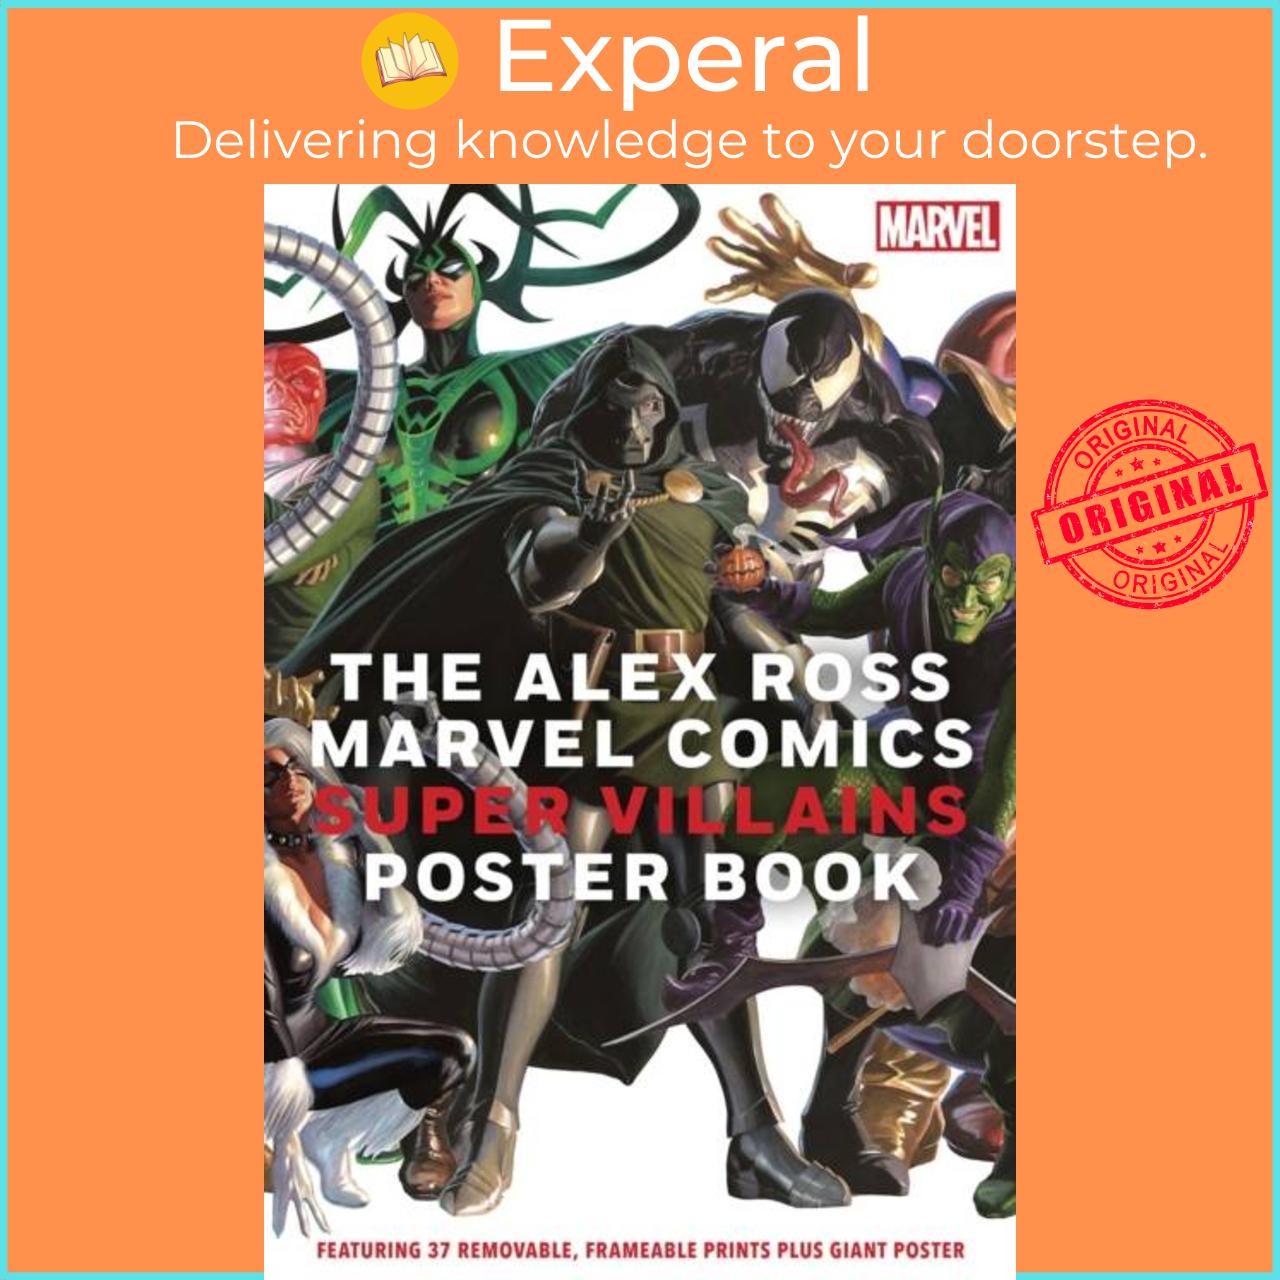 Sách - The Alex Ross Marvel Comics Super Villains Poster Book by Marvel Entertainment (UK edition, paperback)